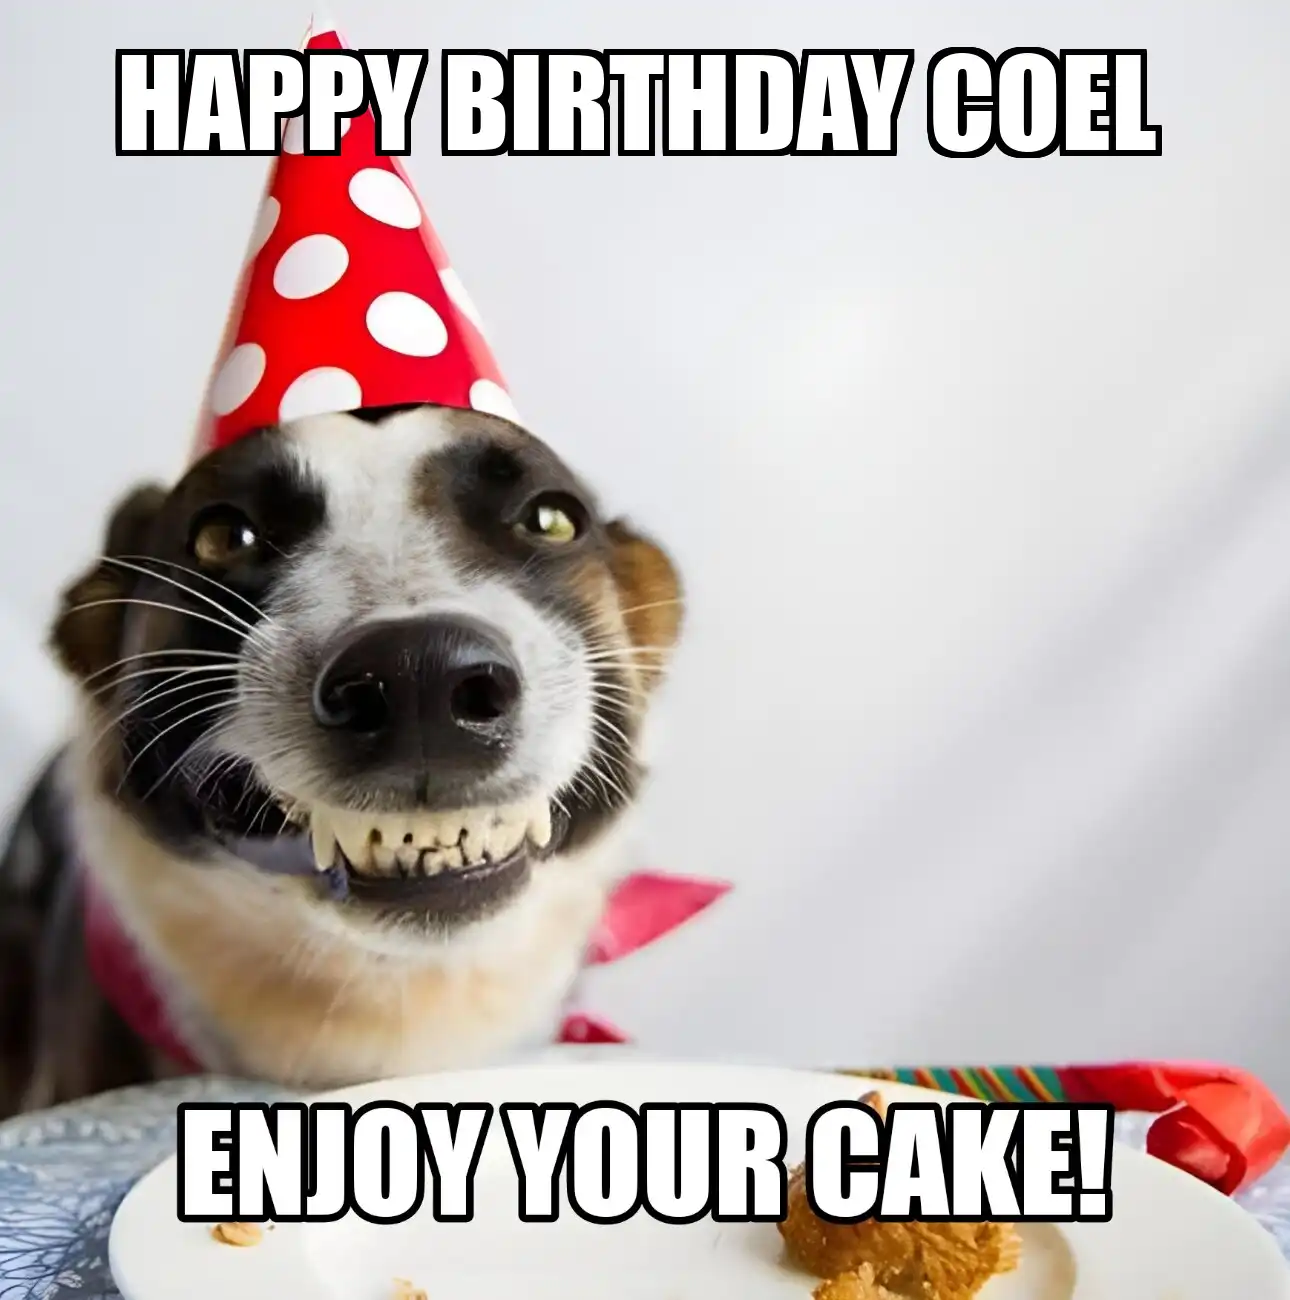 Happy Birthday Coel Enjoy Your Cake Dog Meme